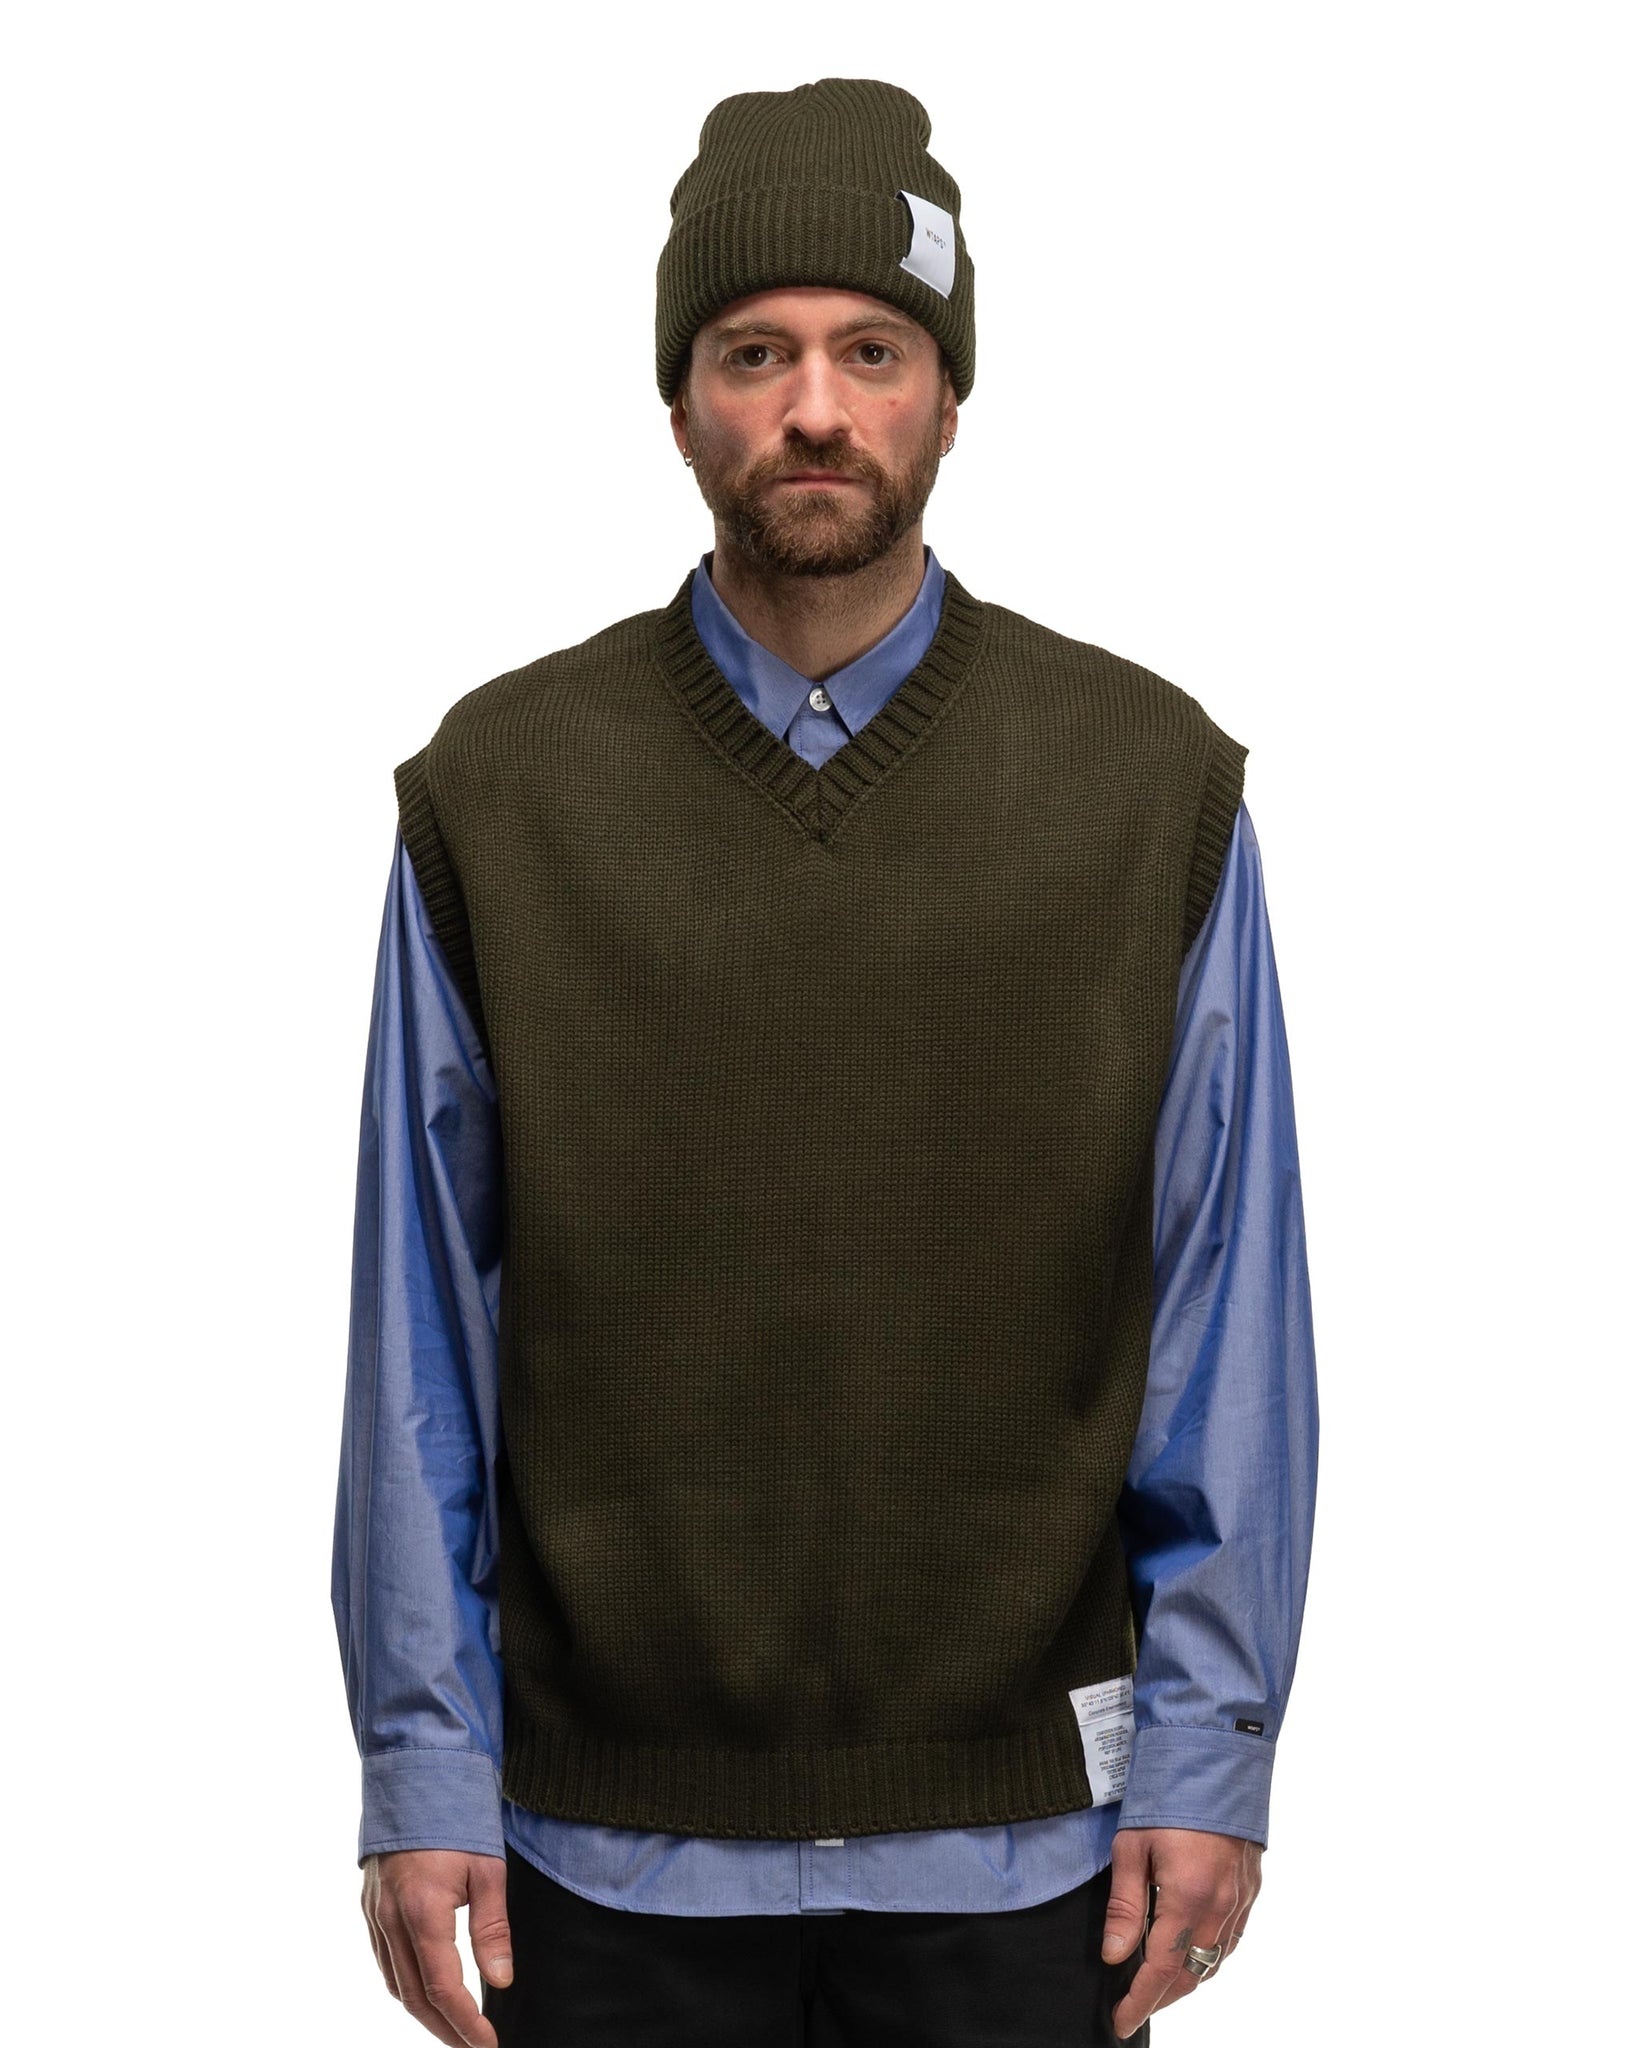 WTAPS Ditch / Cotton Acrylic Sign Vest OLIVE DRAB | REVERSIBLE